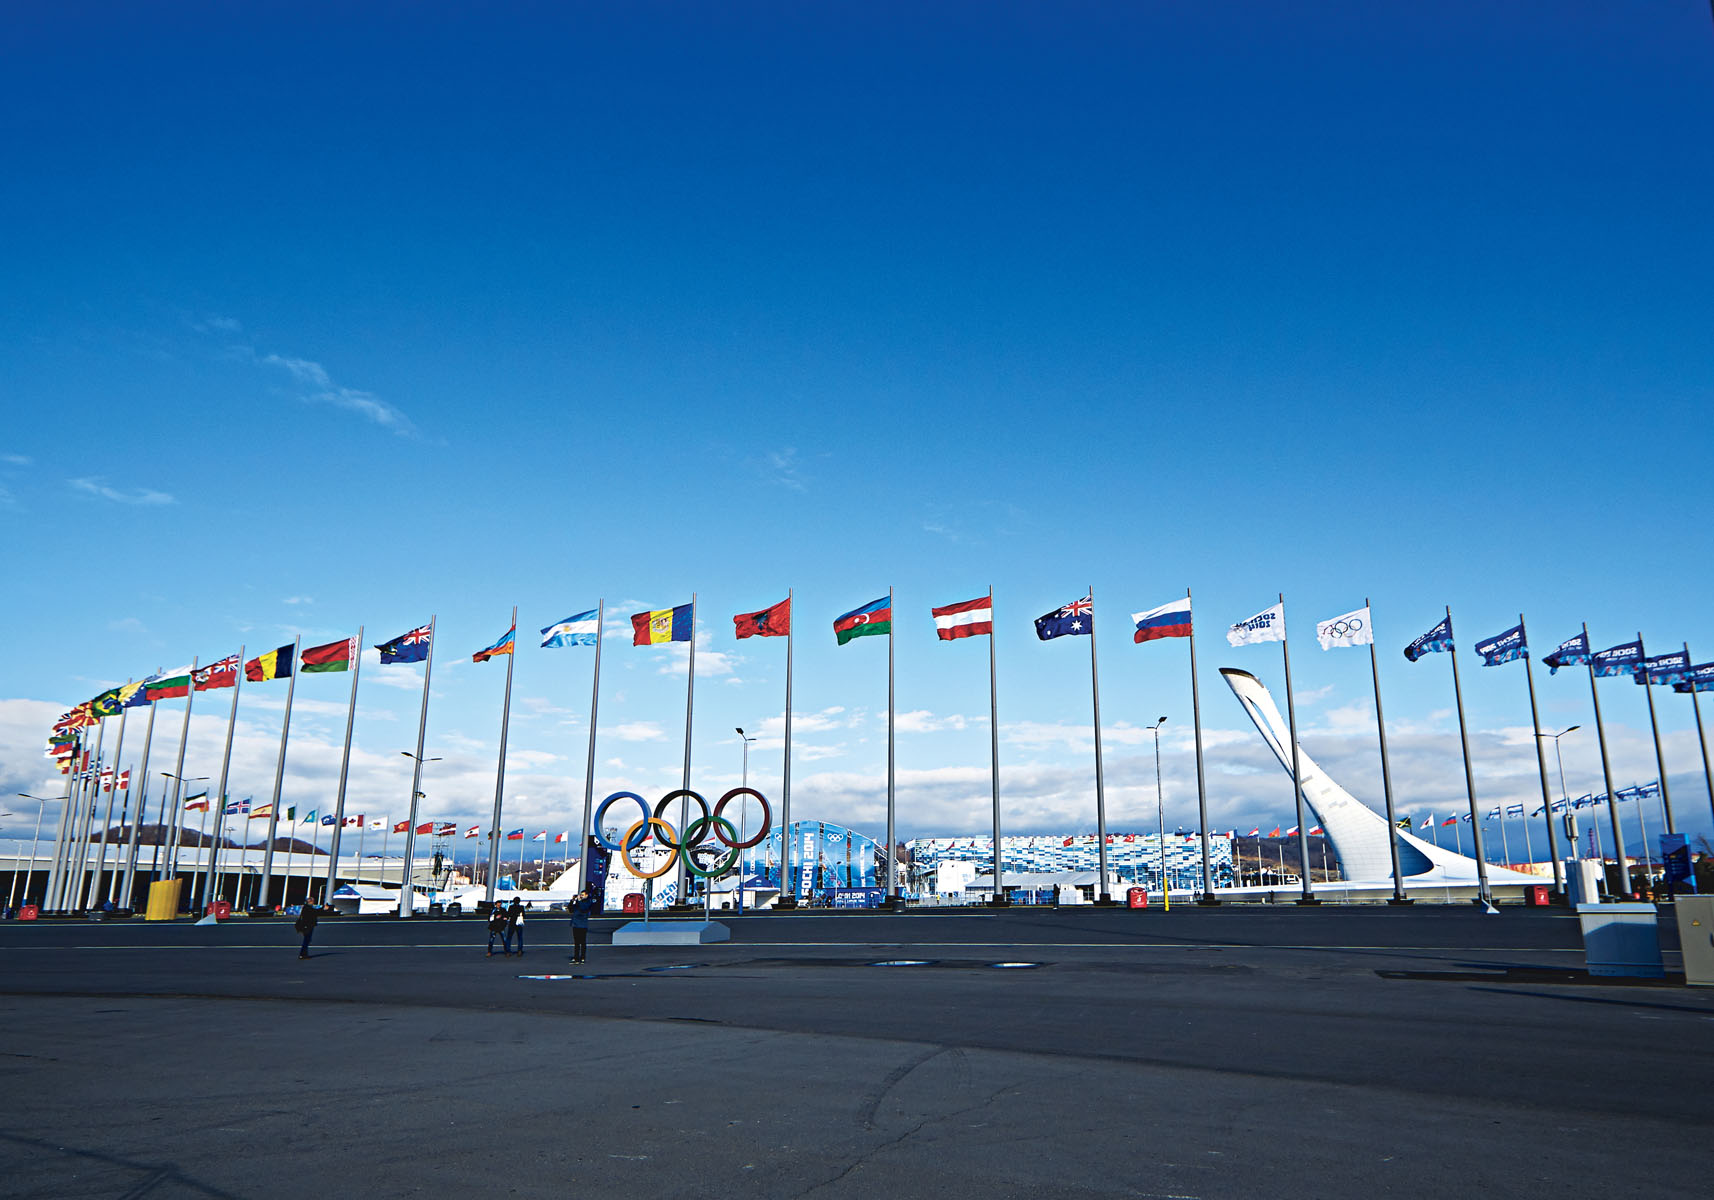 The Olympic stadium in Sochi, Russia